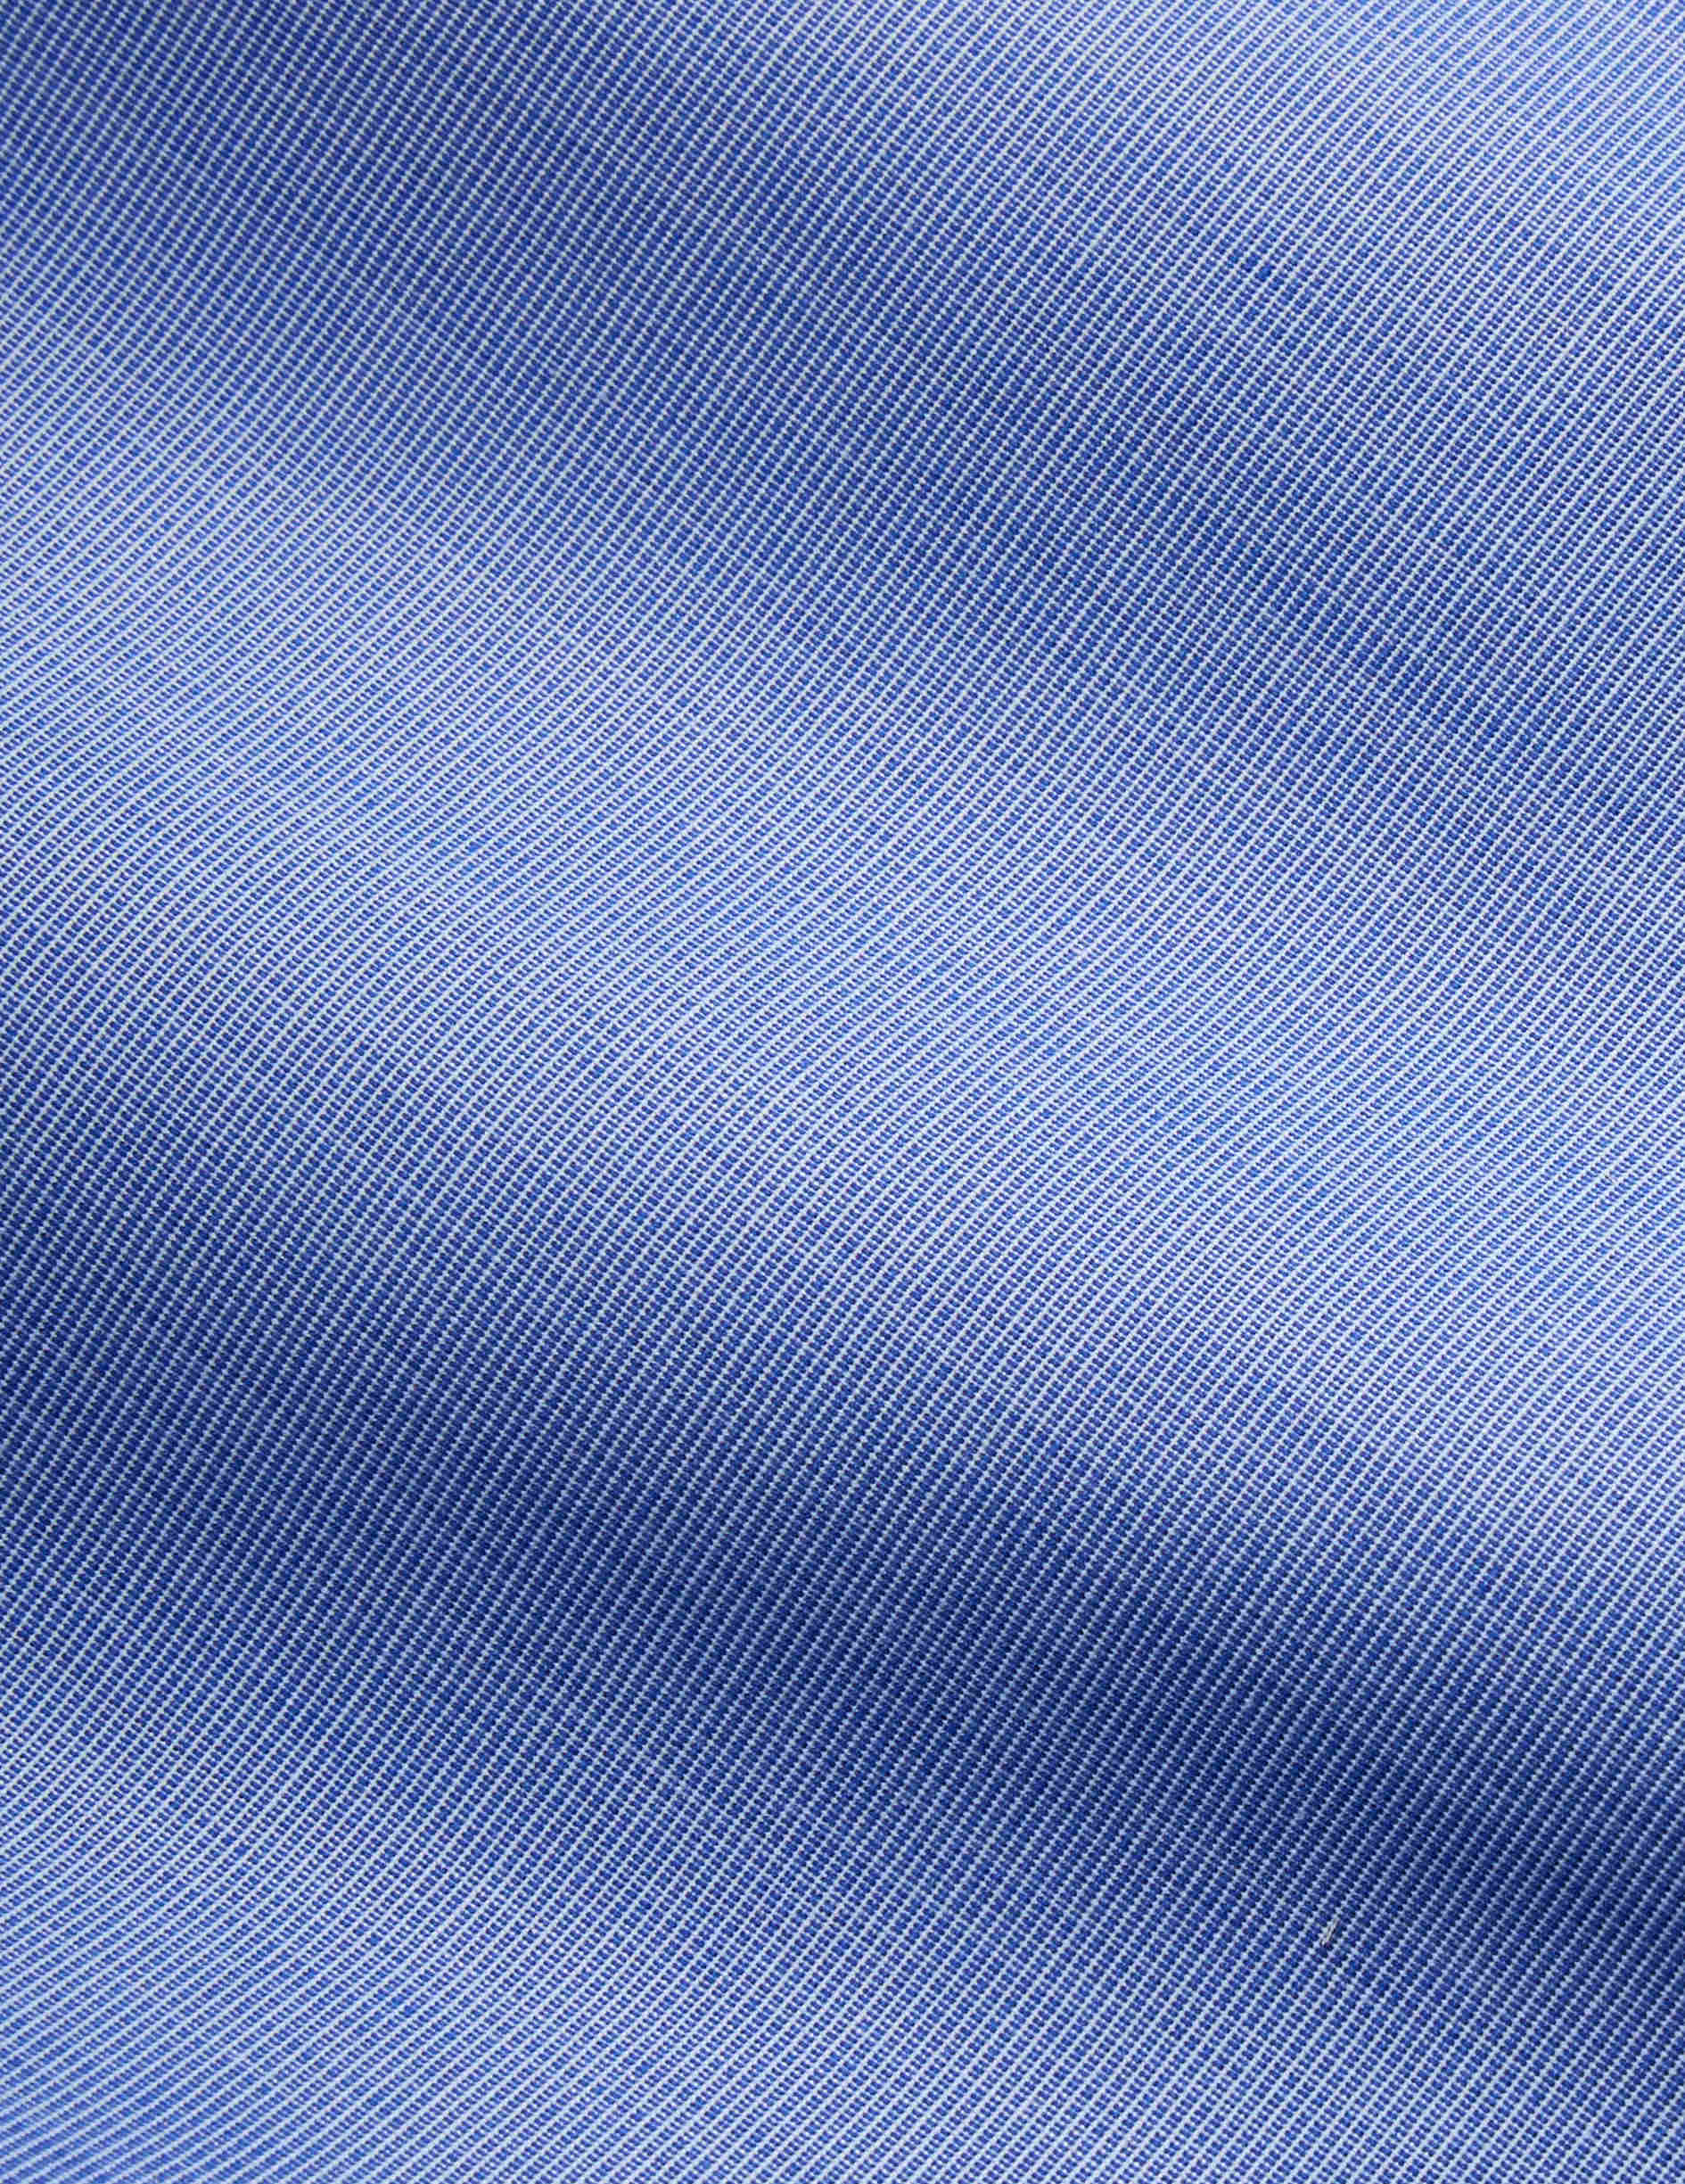 Chemise Semi-ajustée bleue - Fil-à-fil - Col Figaret